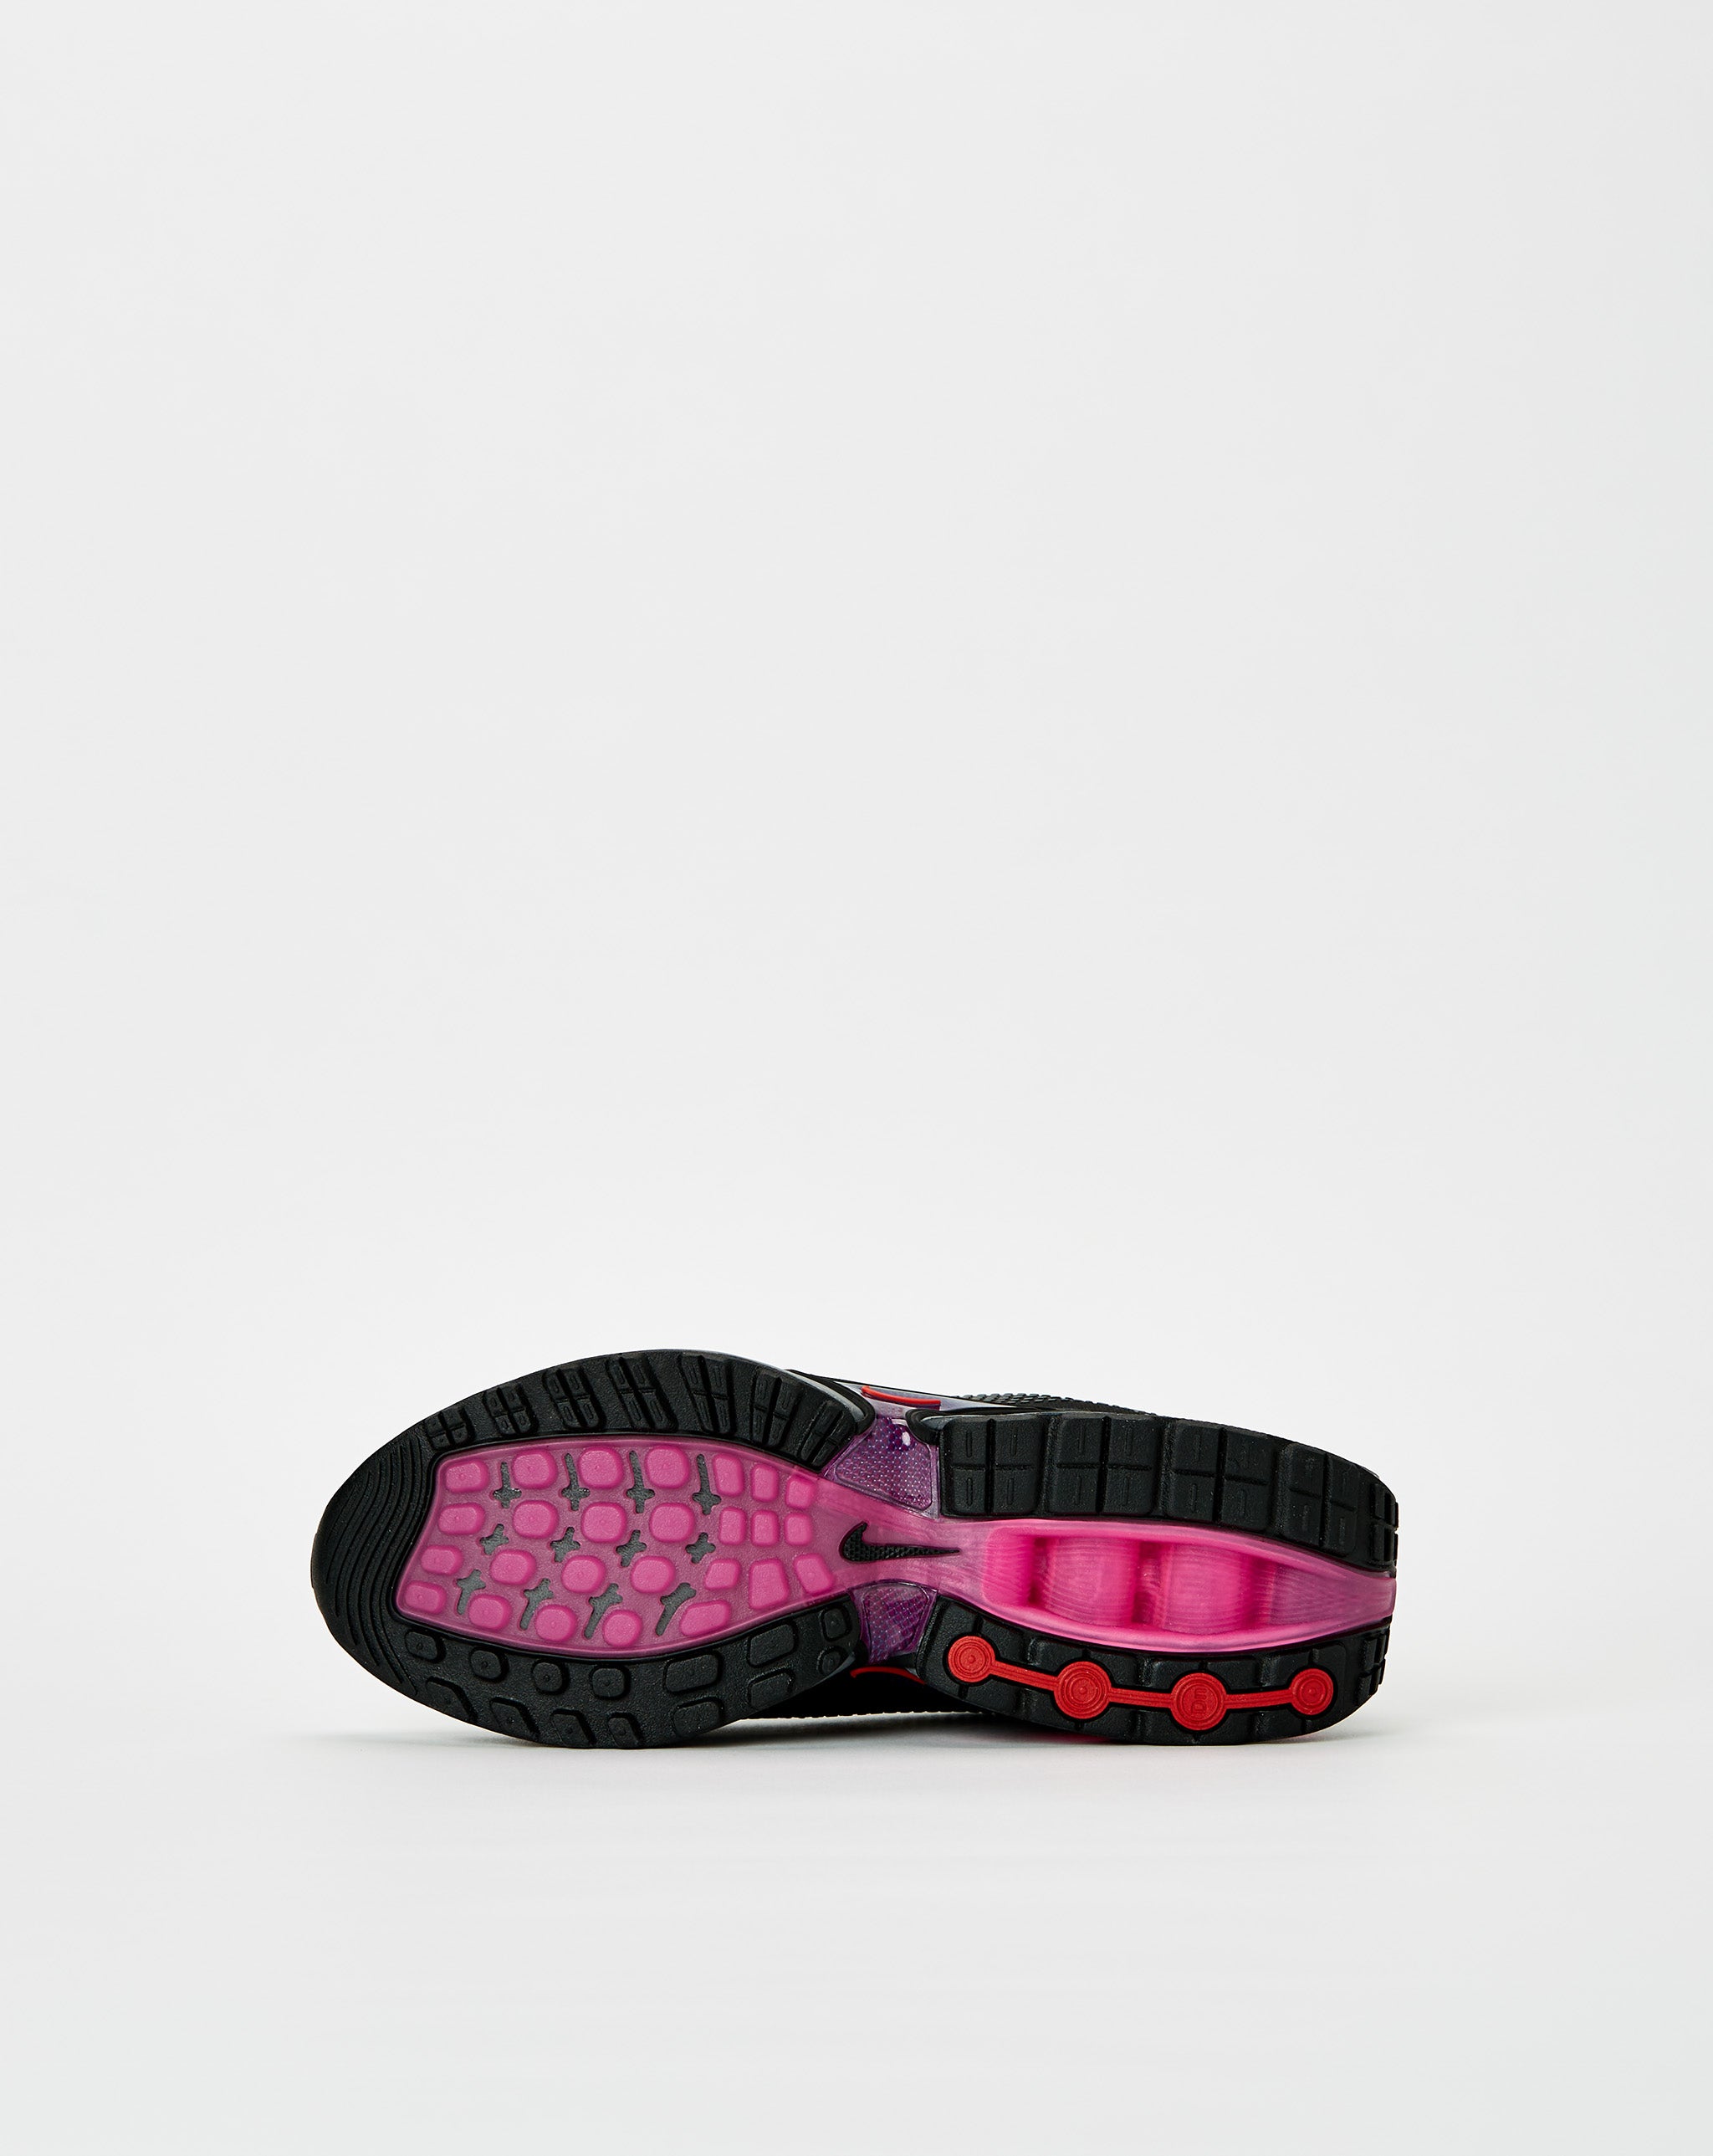 Nike nike shoes high cut for toddlers boys hair salon  - Cheap Erlebniswelt-fliegenfischen Jordan outlet